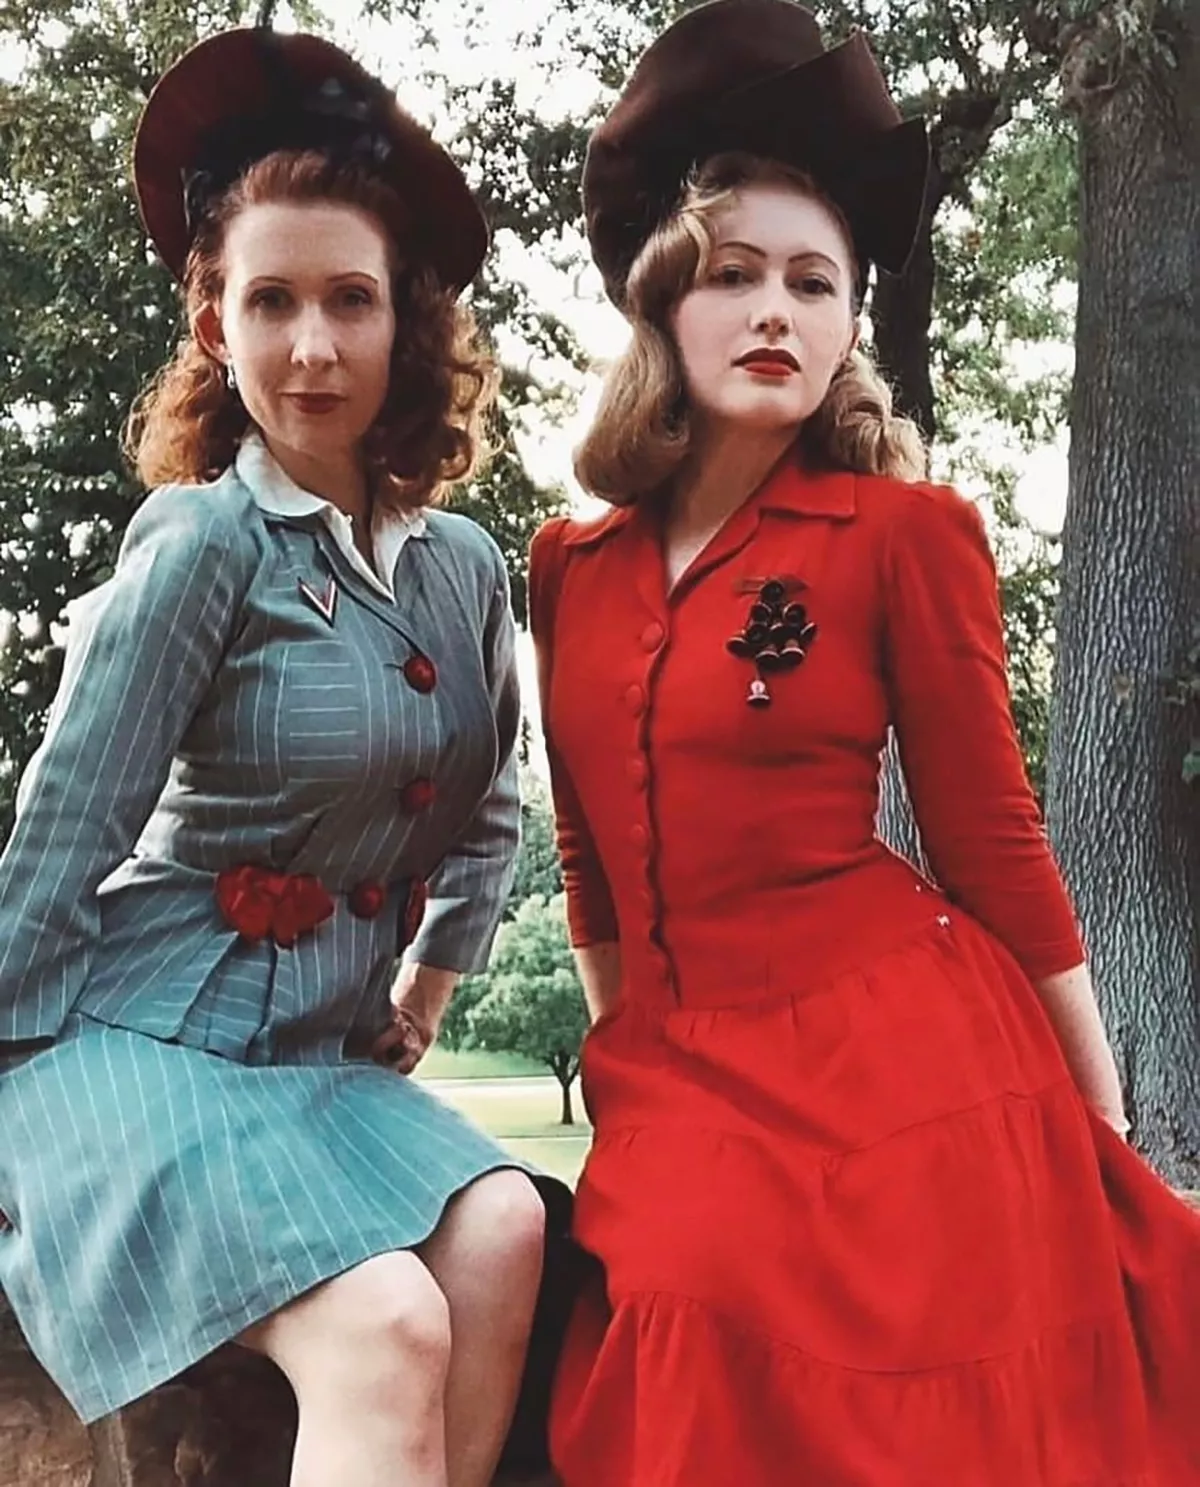 Dallas Women Living in 1940s Time Warp Showcase $20,000 Clothing